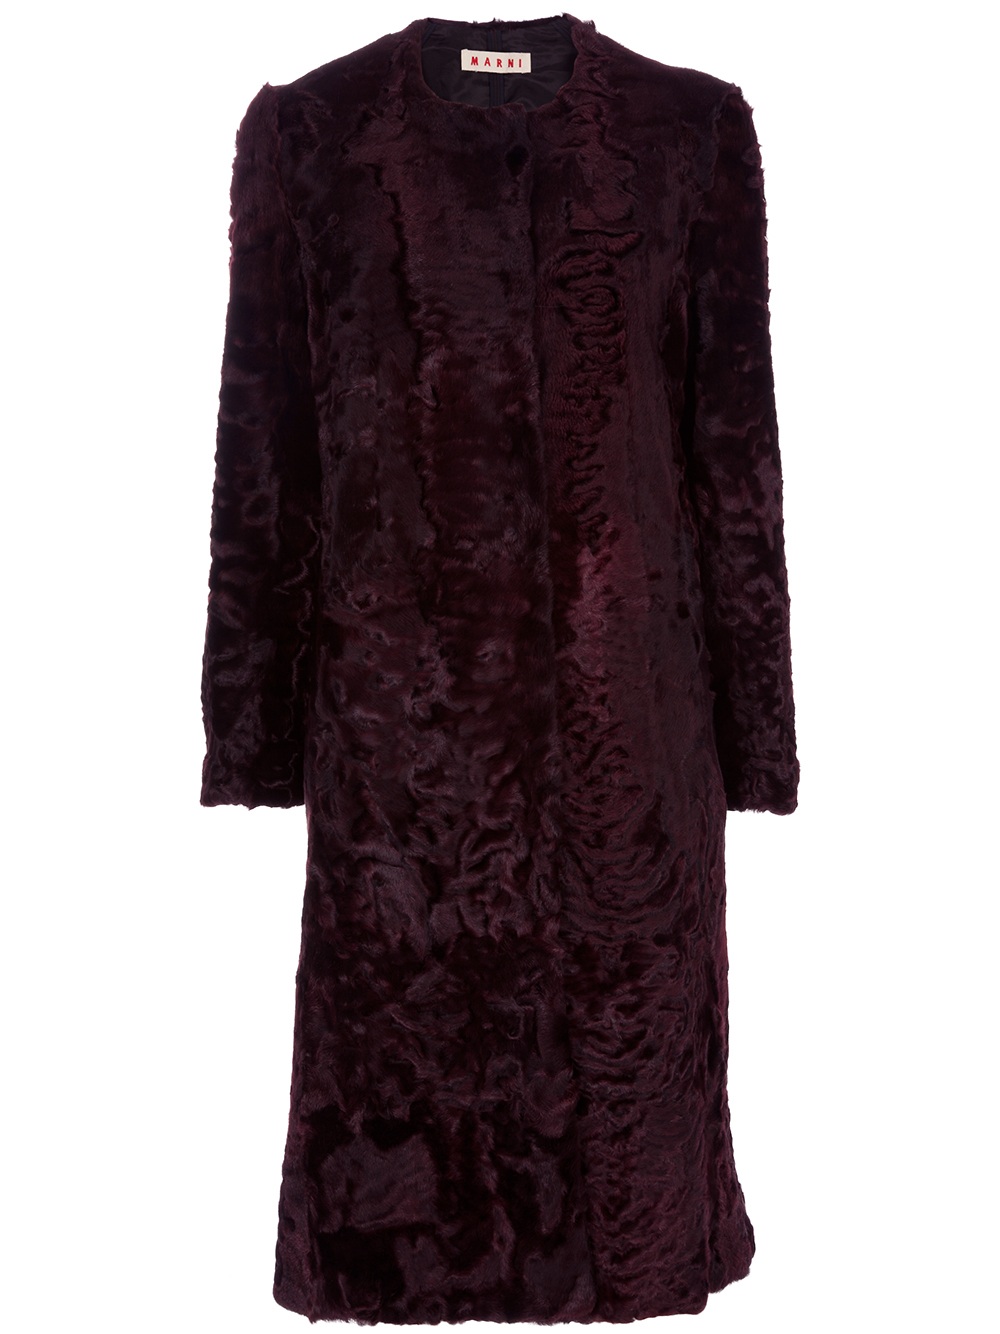 Lyst - Marni Fur Coat in Red